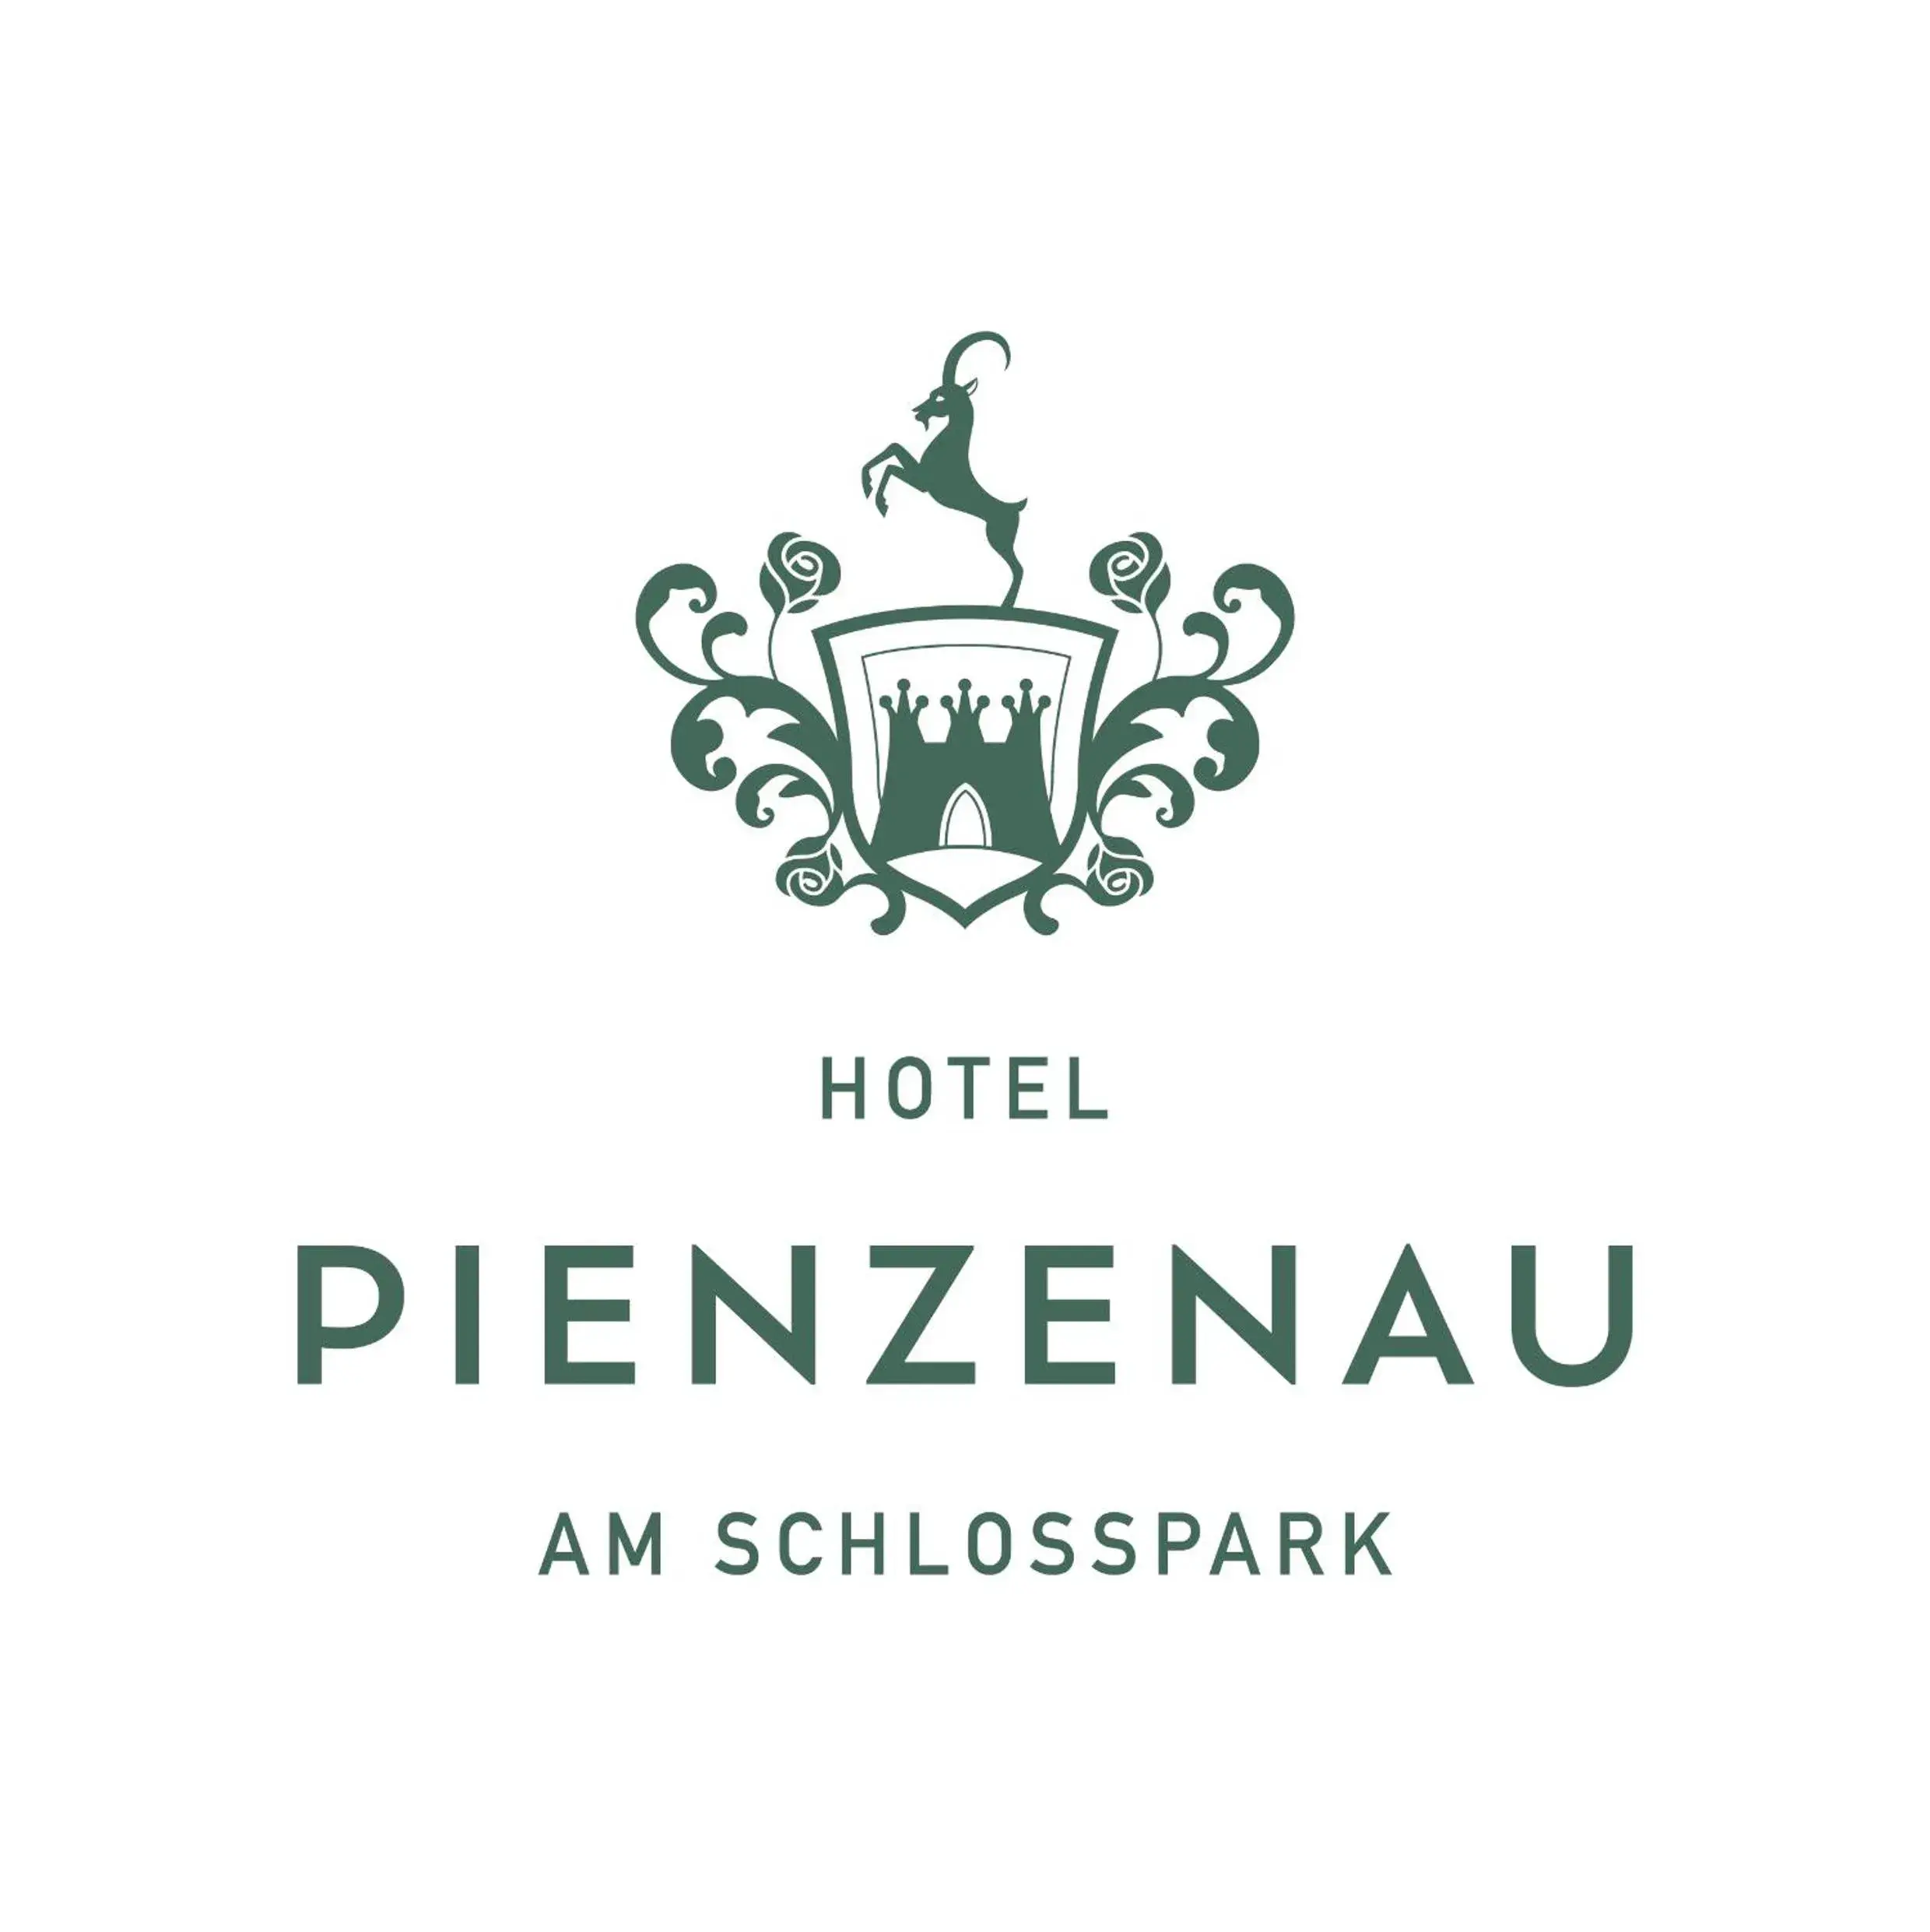 Property logo or sign in Hotel Pienzenau Am Schlosspark